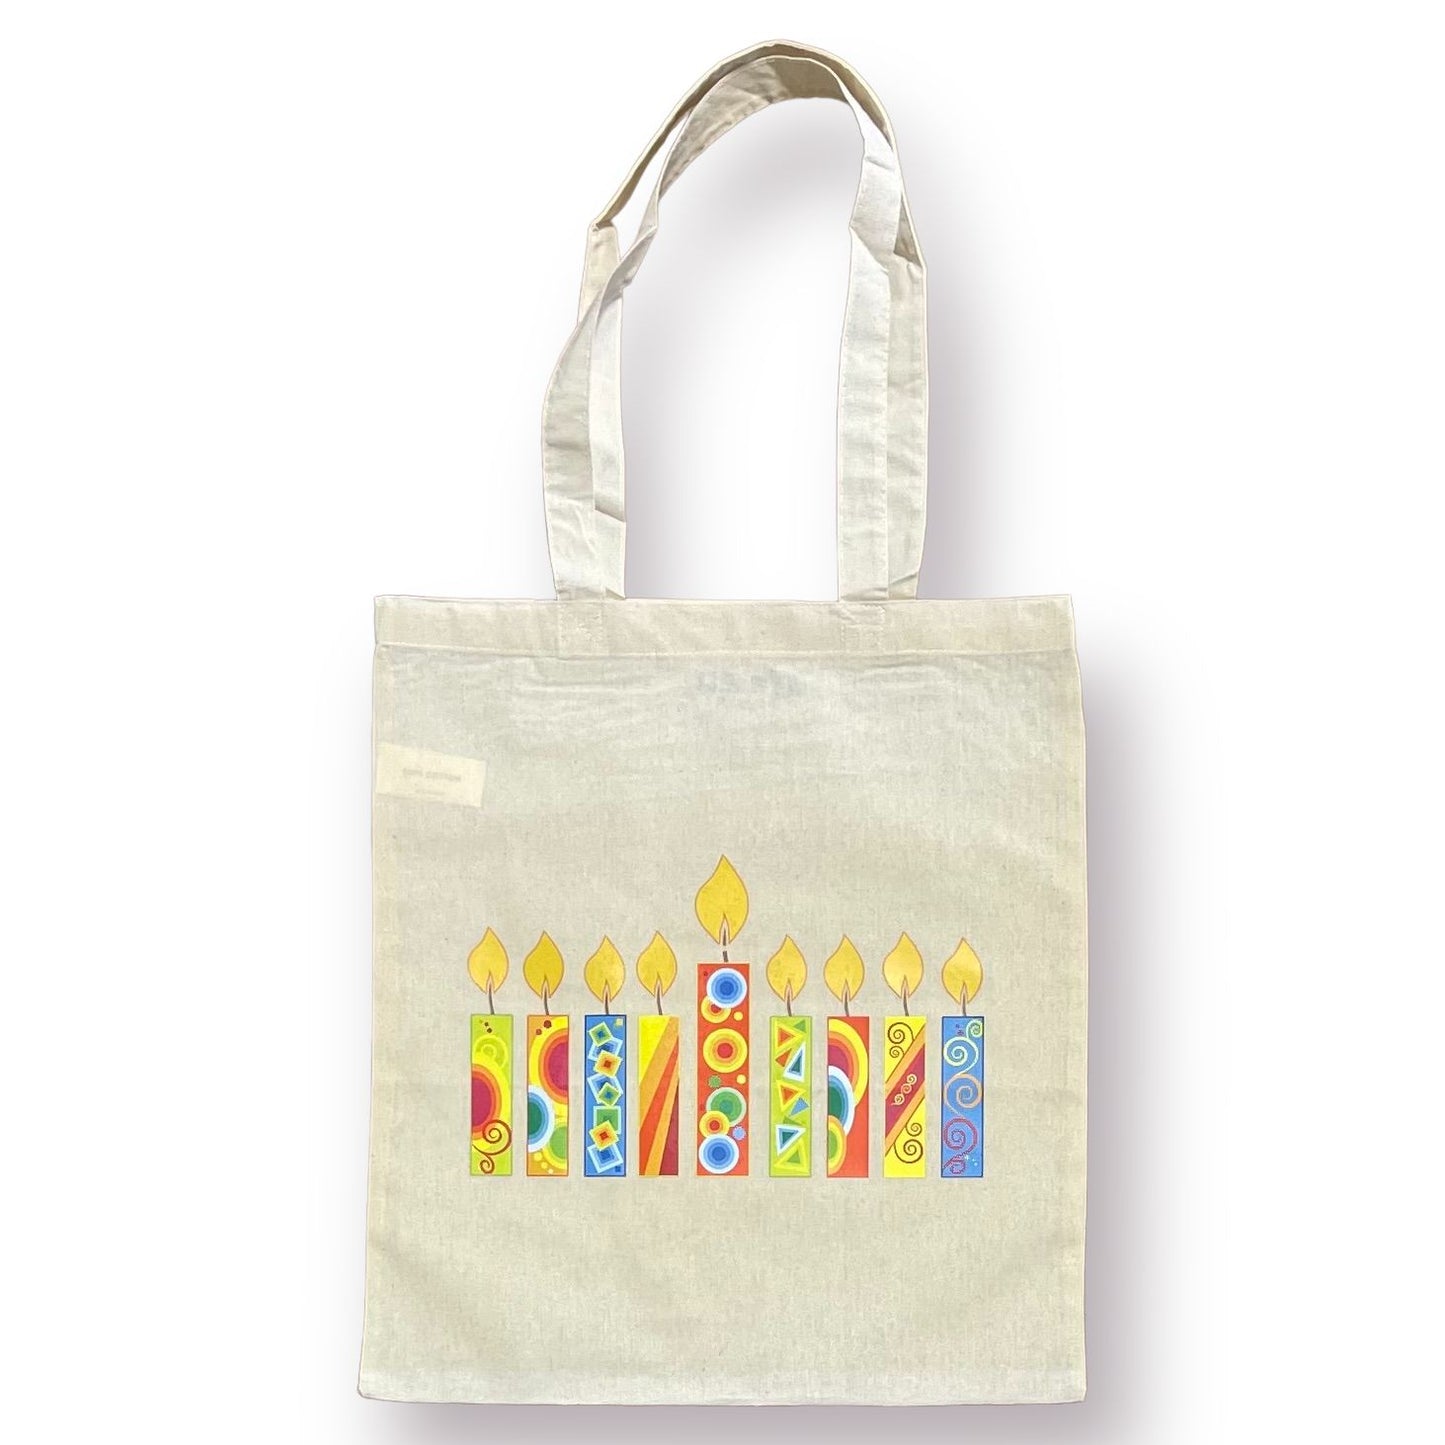 Colorful hanukkah candles 15 x 16 tote bag for hanukkah gifts gifts bag Chanukah festive design for hanukkah party